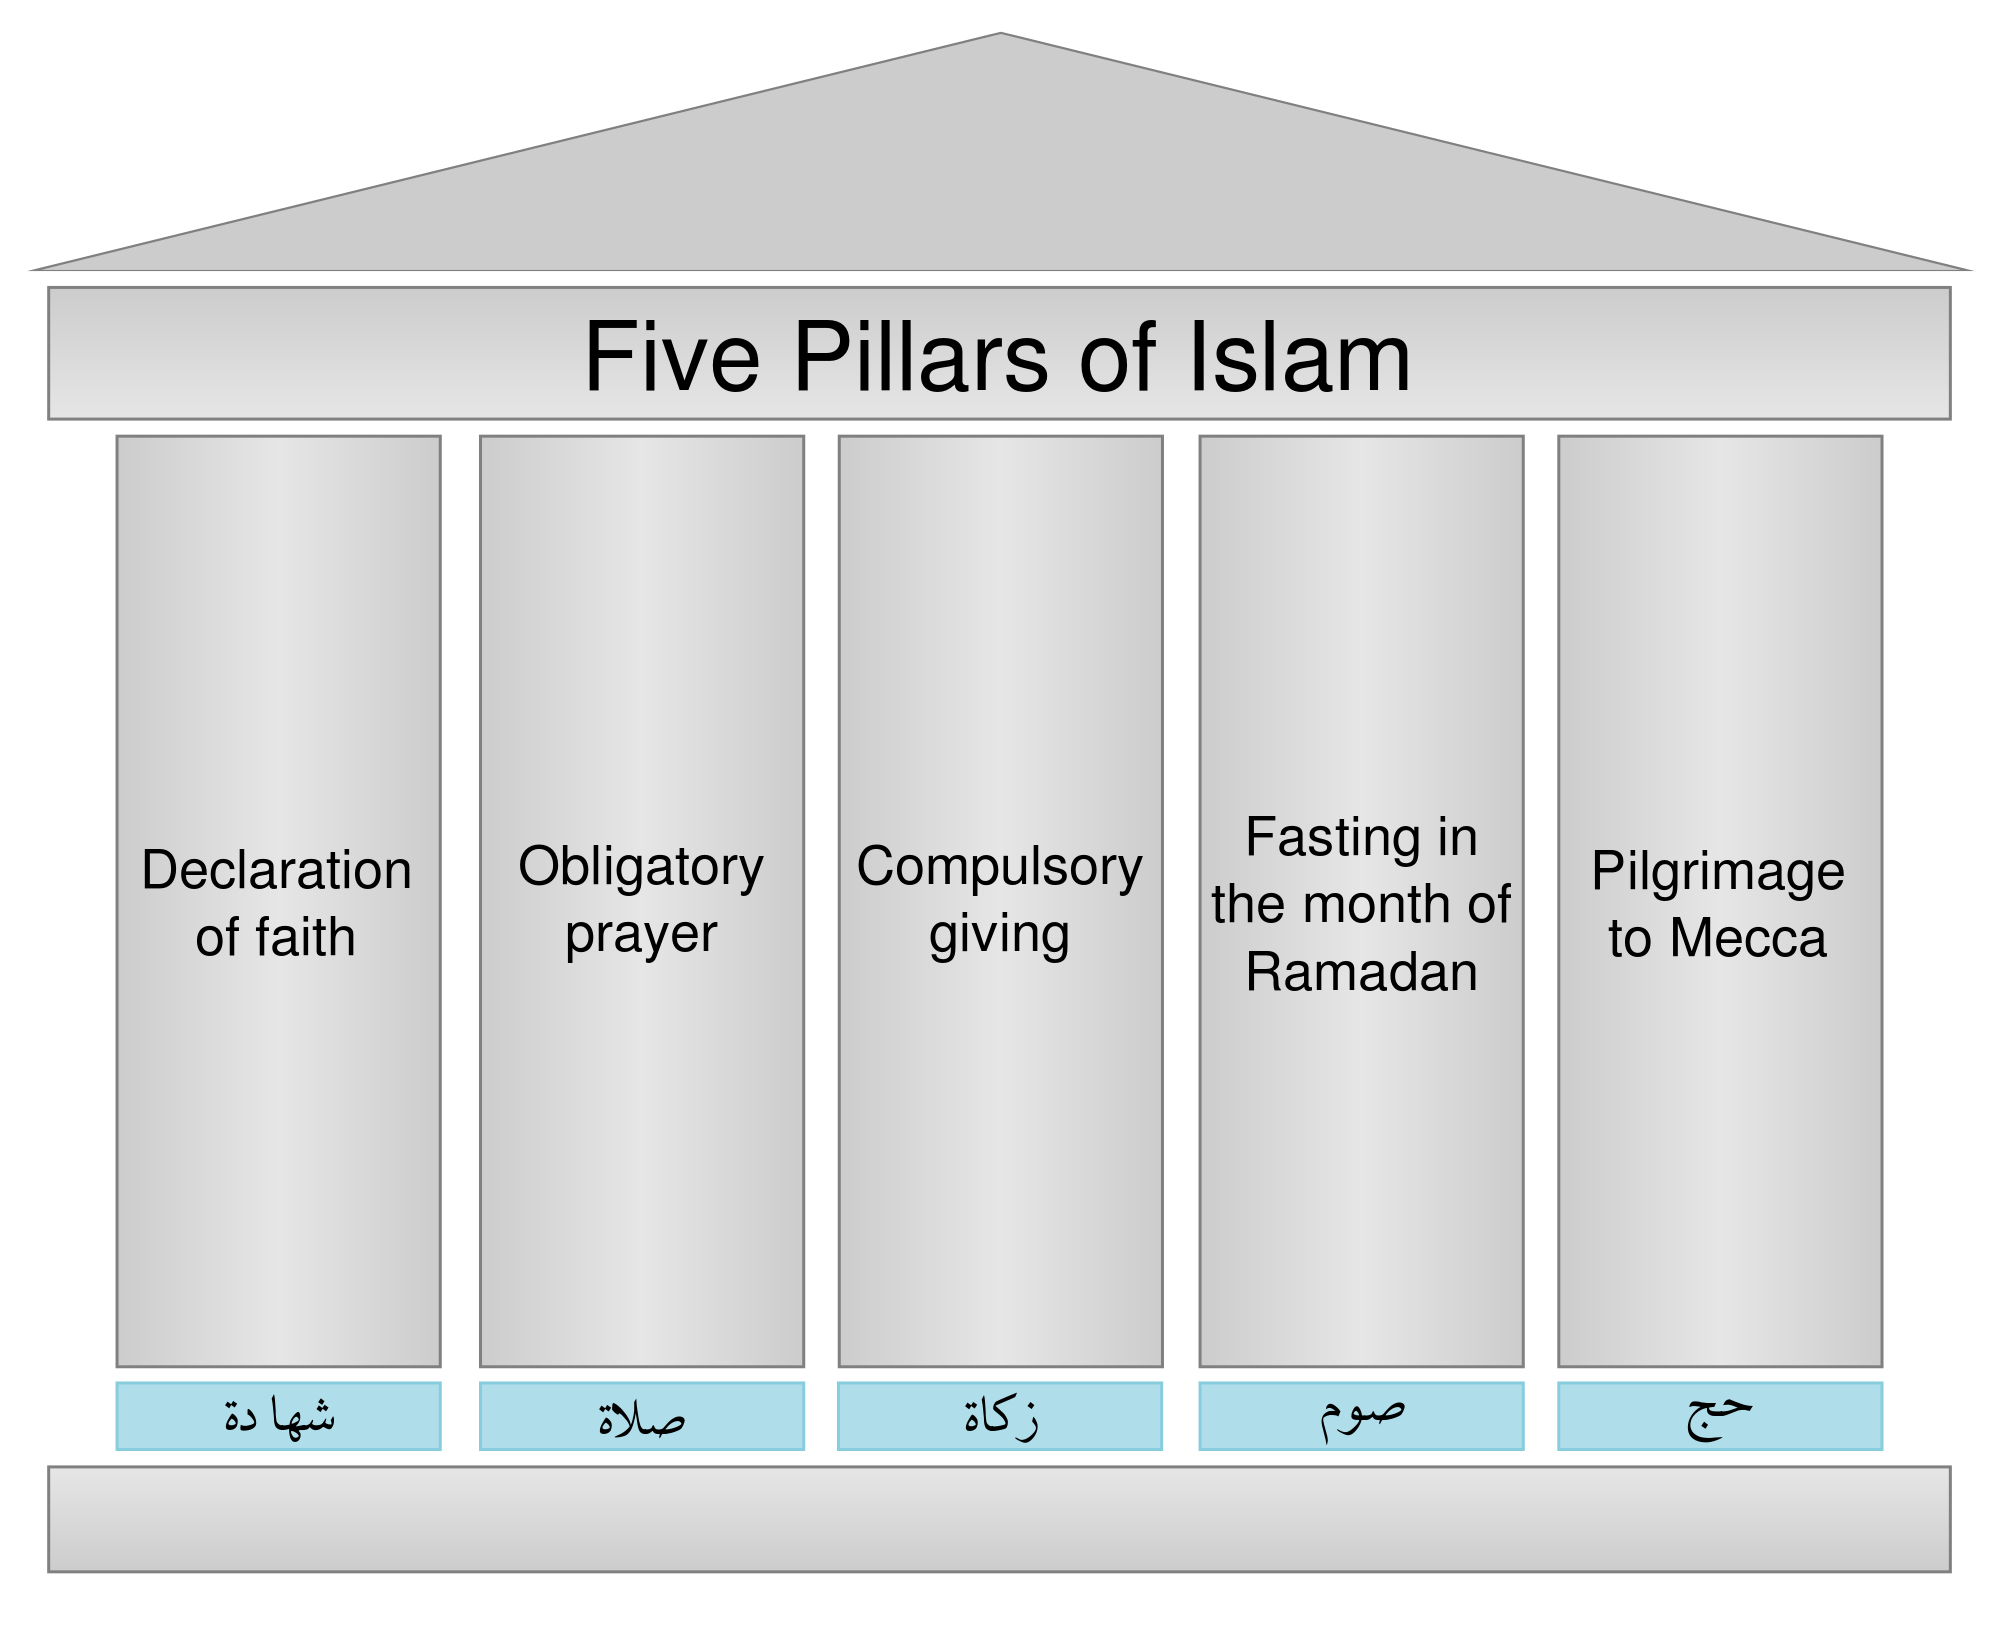 Five Pillars of Islam - Wikipedia